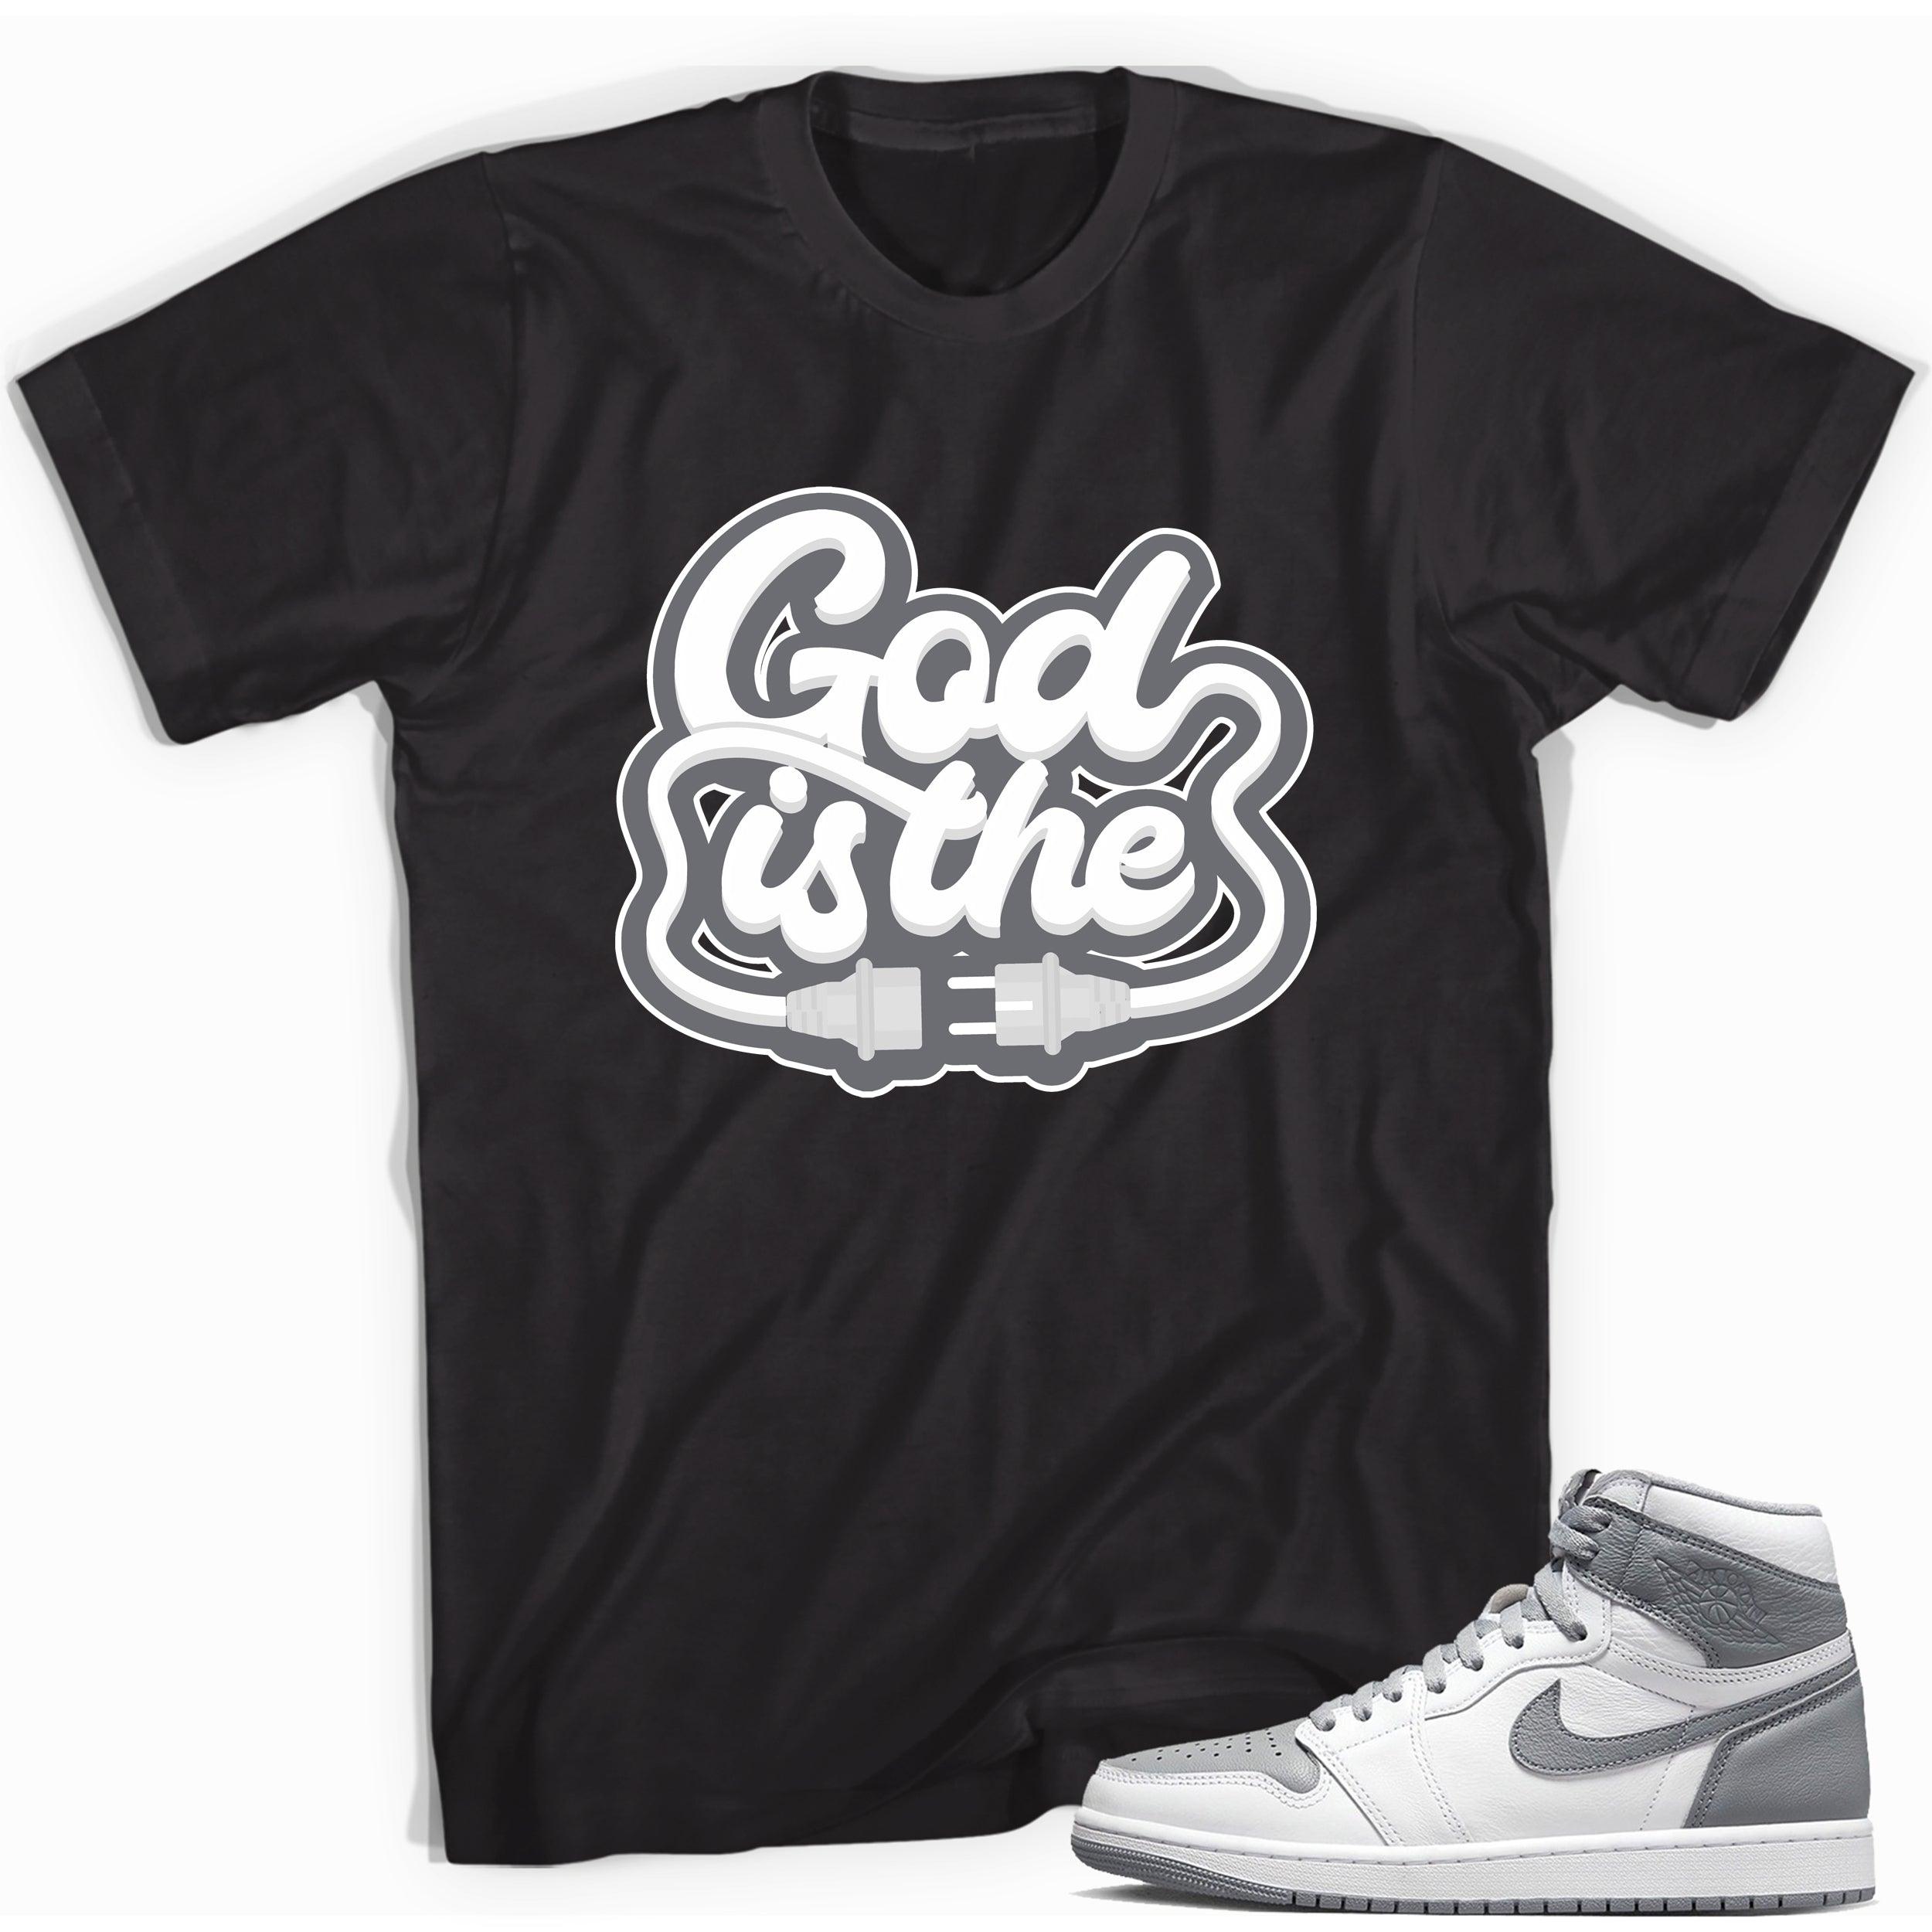 God is the Plug t-shirt for Jordan 1s photo